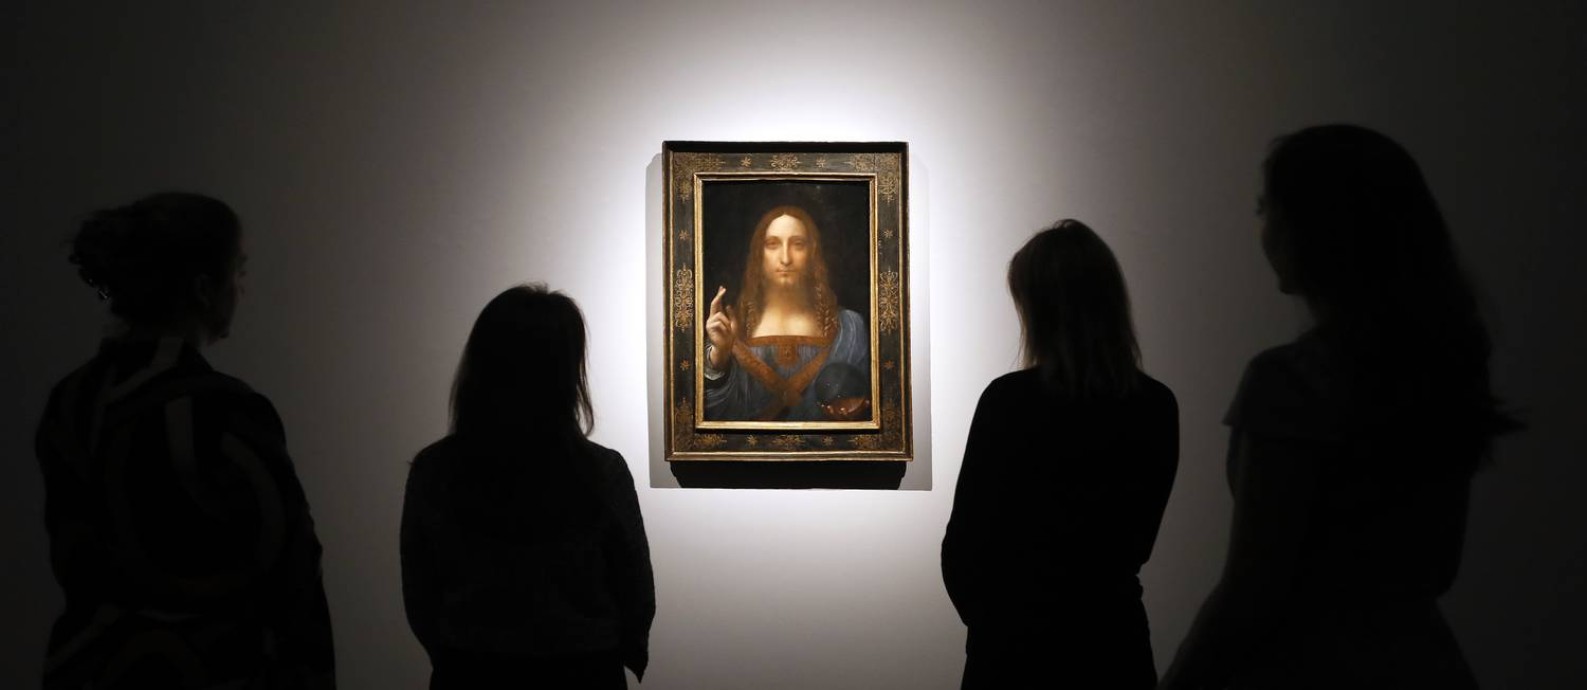 Pessoas observam o quadro 'Salvator Mundi', de Leonardo da Vinci Foto: Kirsty Wigglesworth / AP